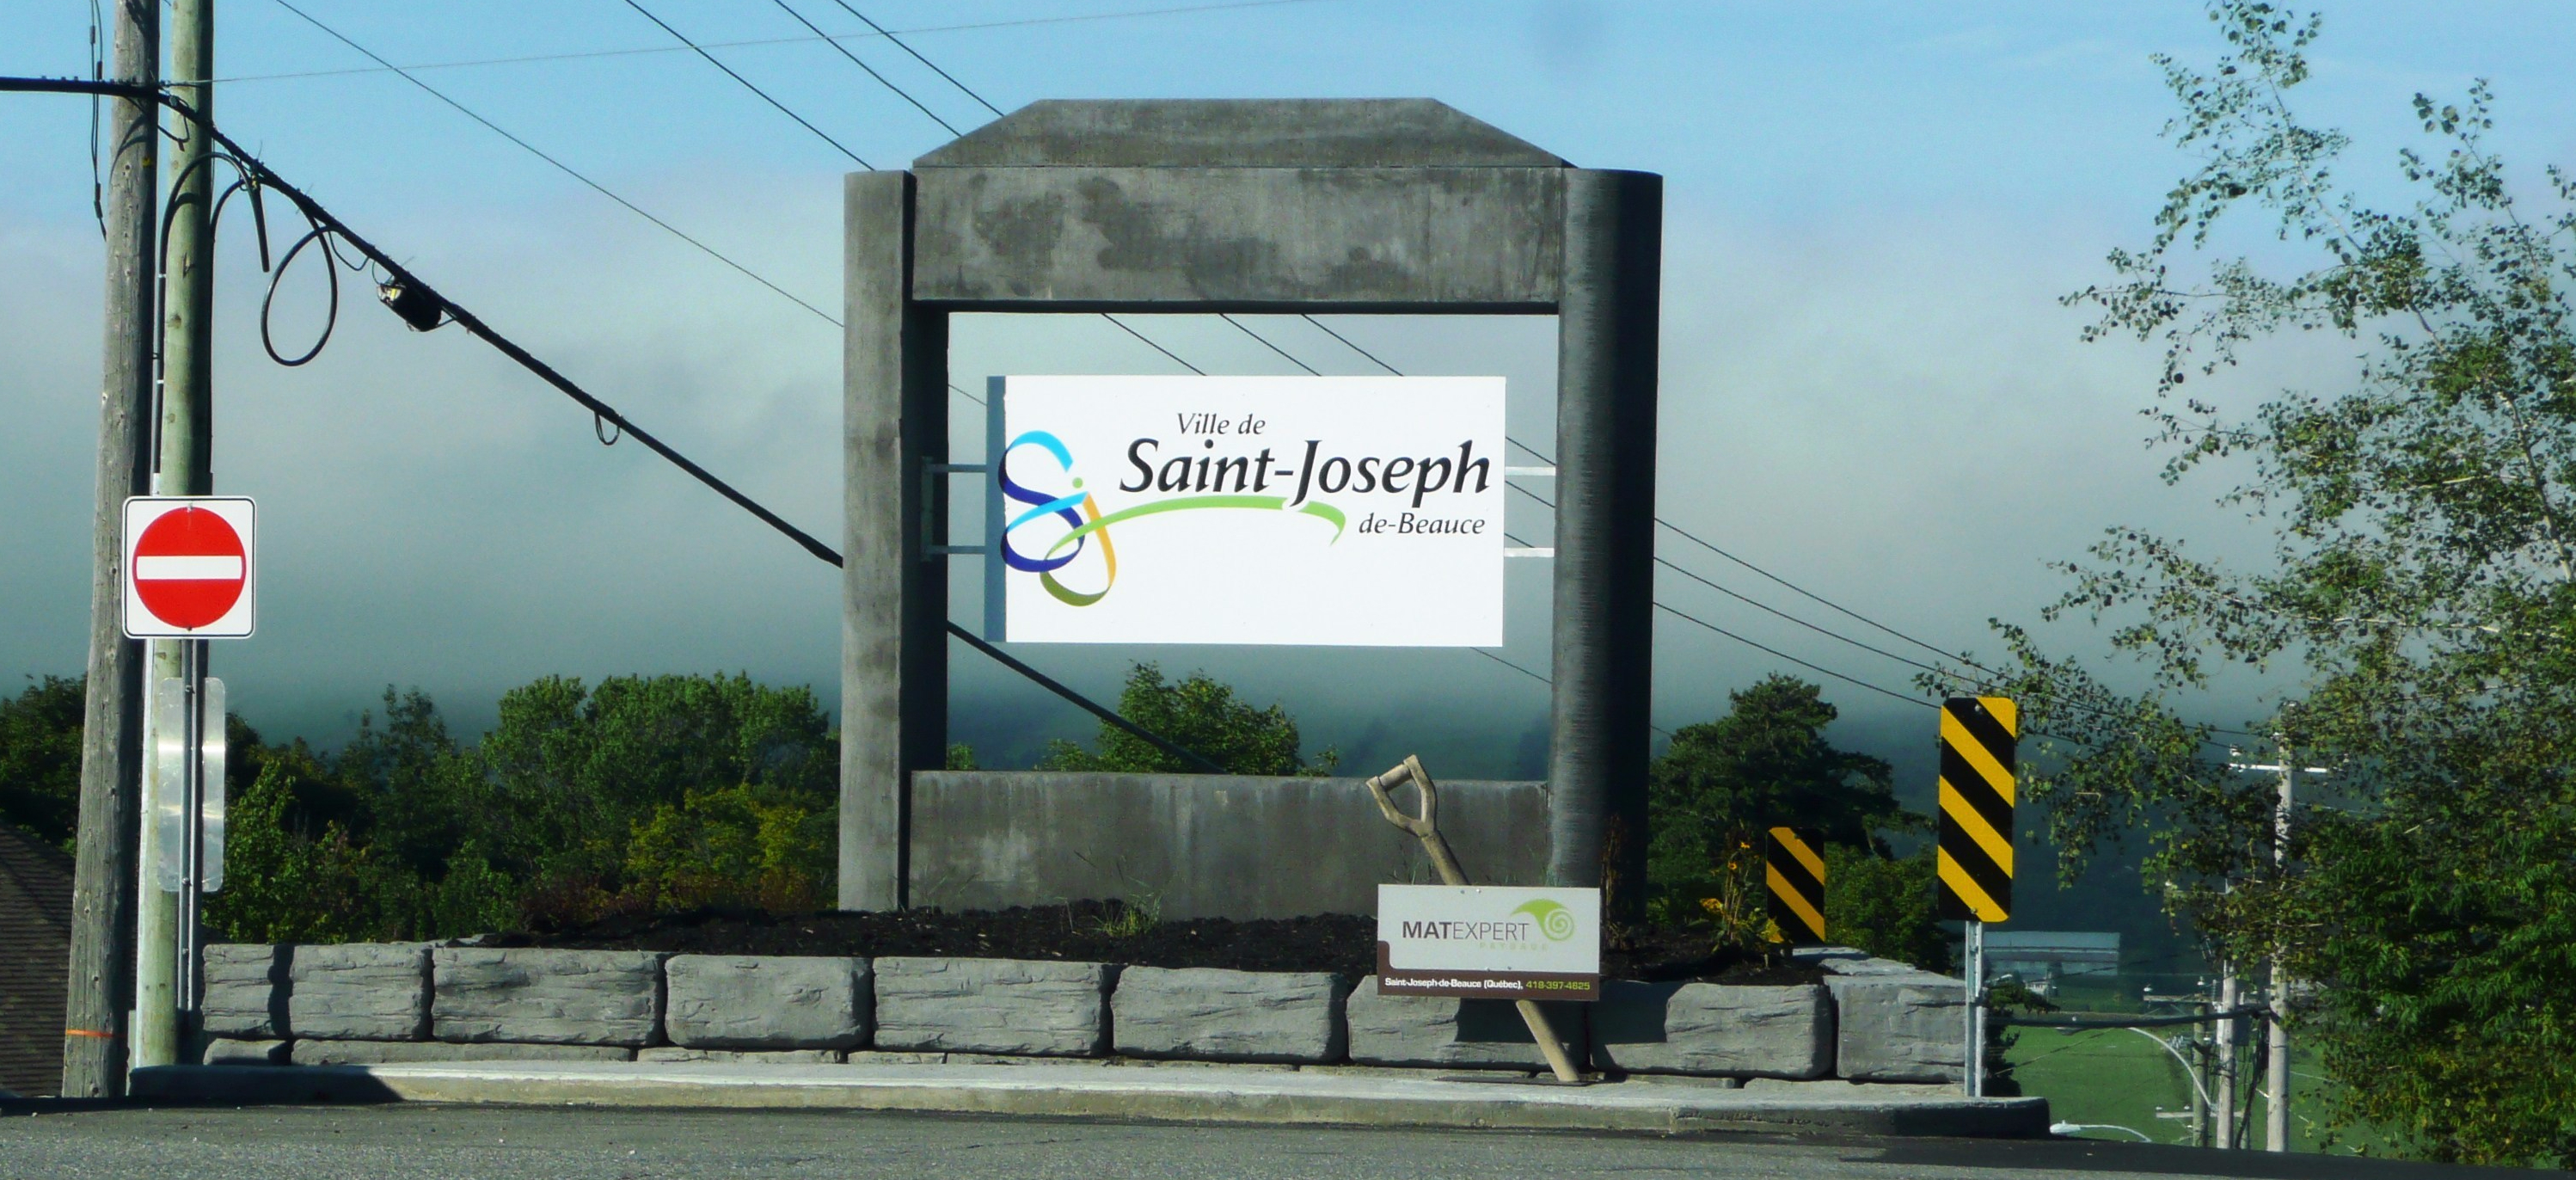 Saint Joseph of Beauce city sign